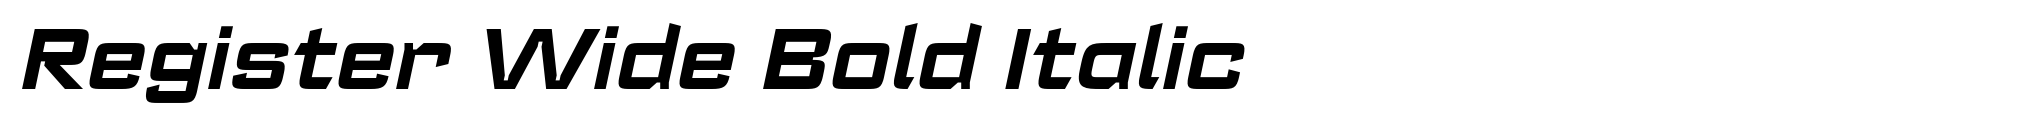 Register Wide Bold Italic image